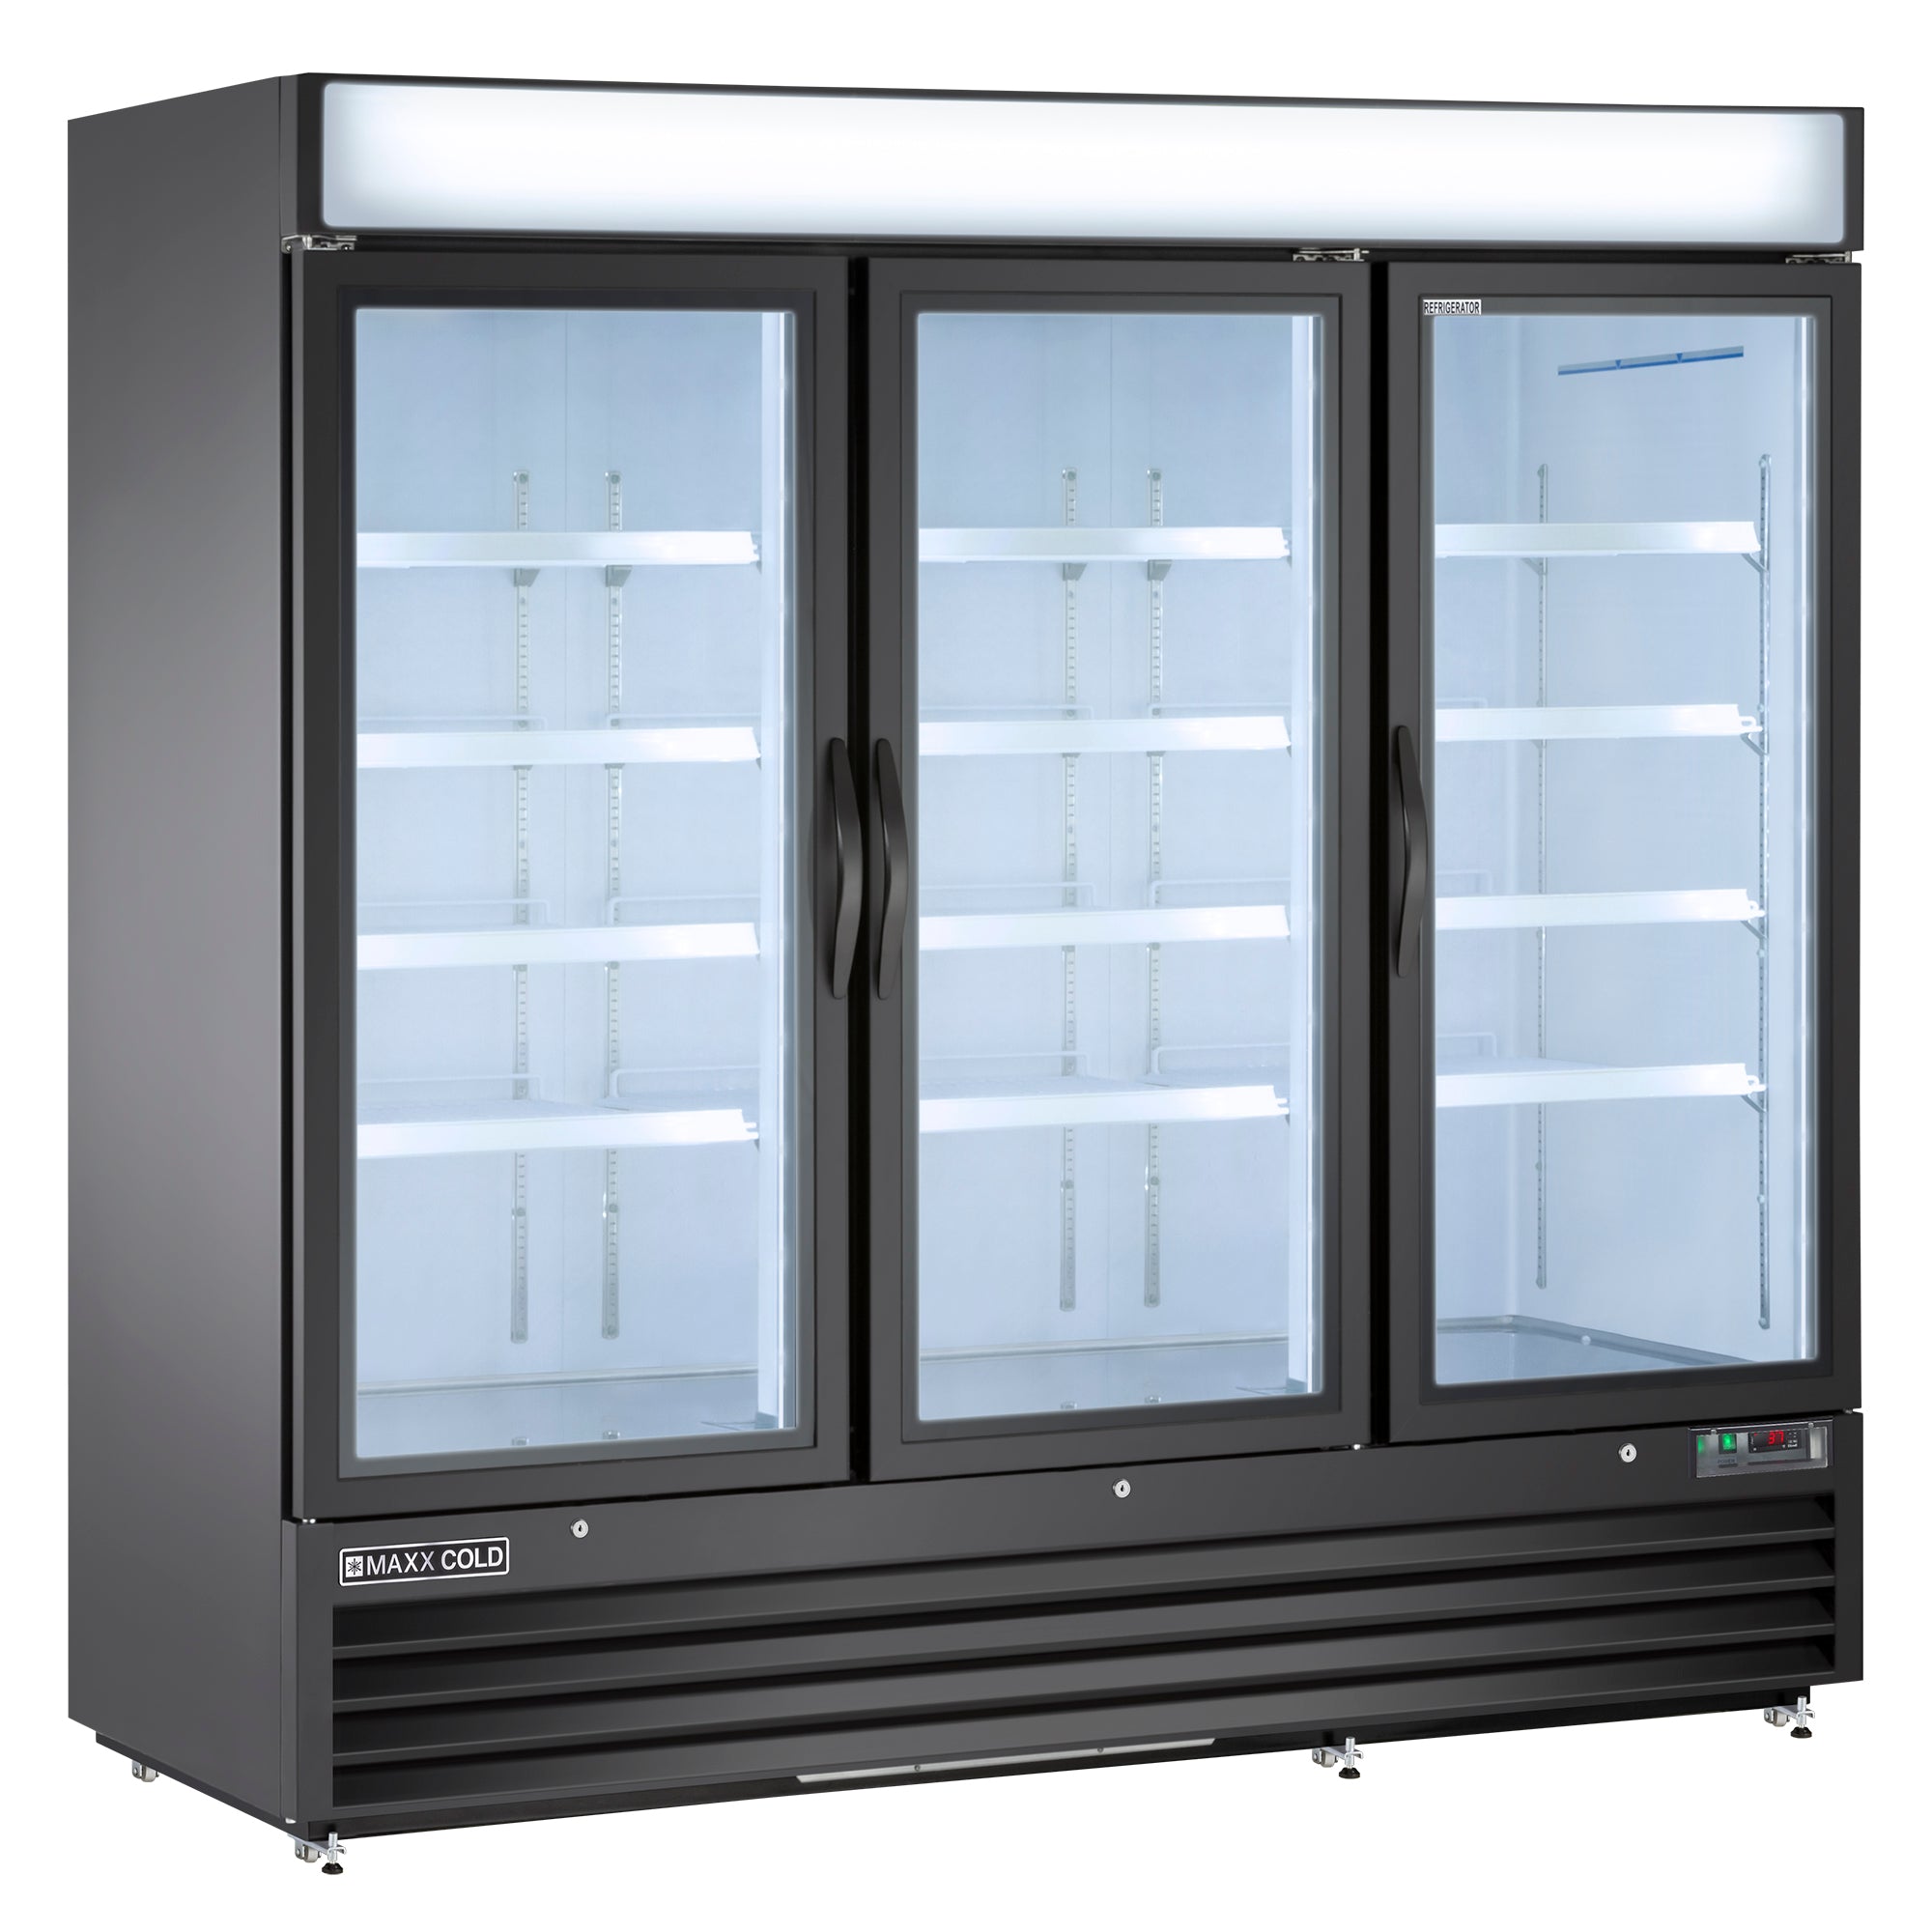 Maxx Cold - MXM3-72RBHC, Maxx Cold Triple Glass Door Merchandiser Refrigerator, Free Standing, 81"W, 72 cu. ft. Storage Capacity, in Black